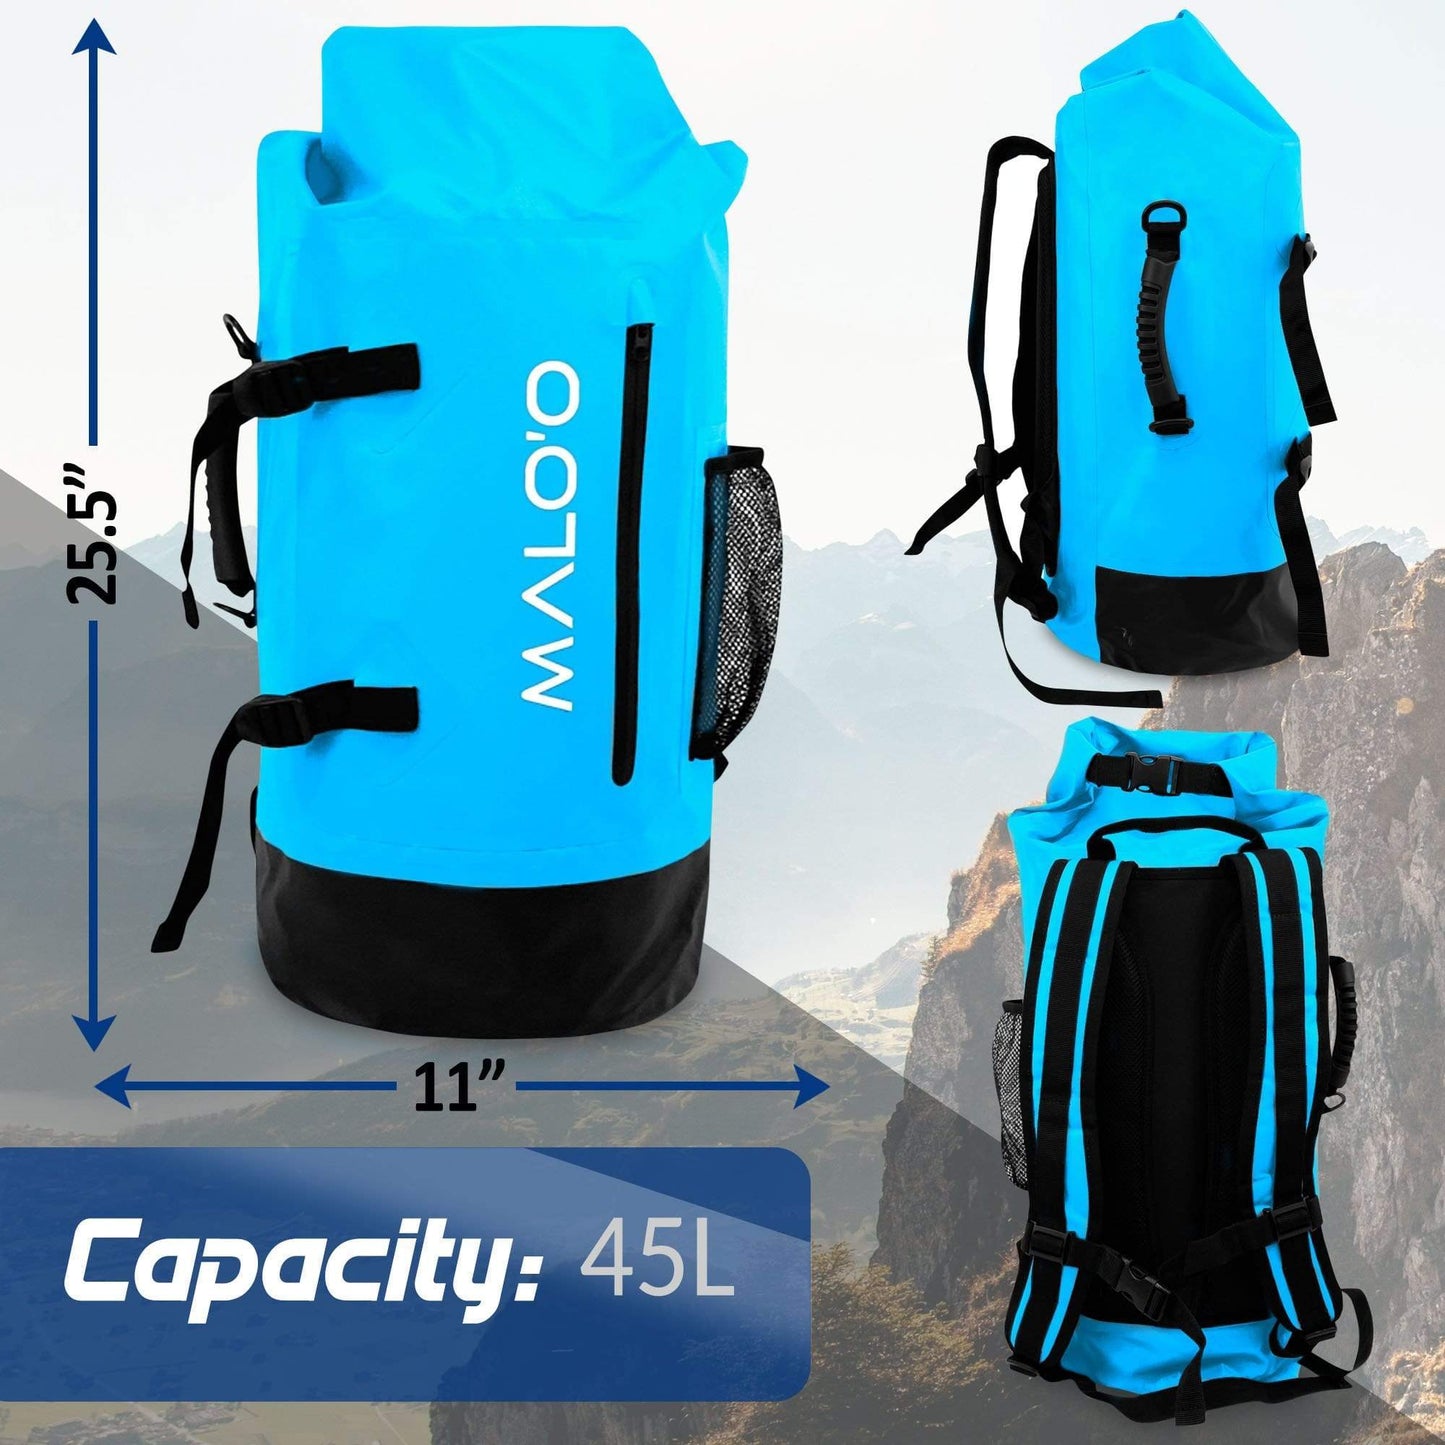 Malo'o DryPack XL Waterproof Backpack - 45 Liters